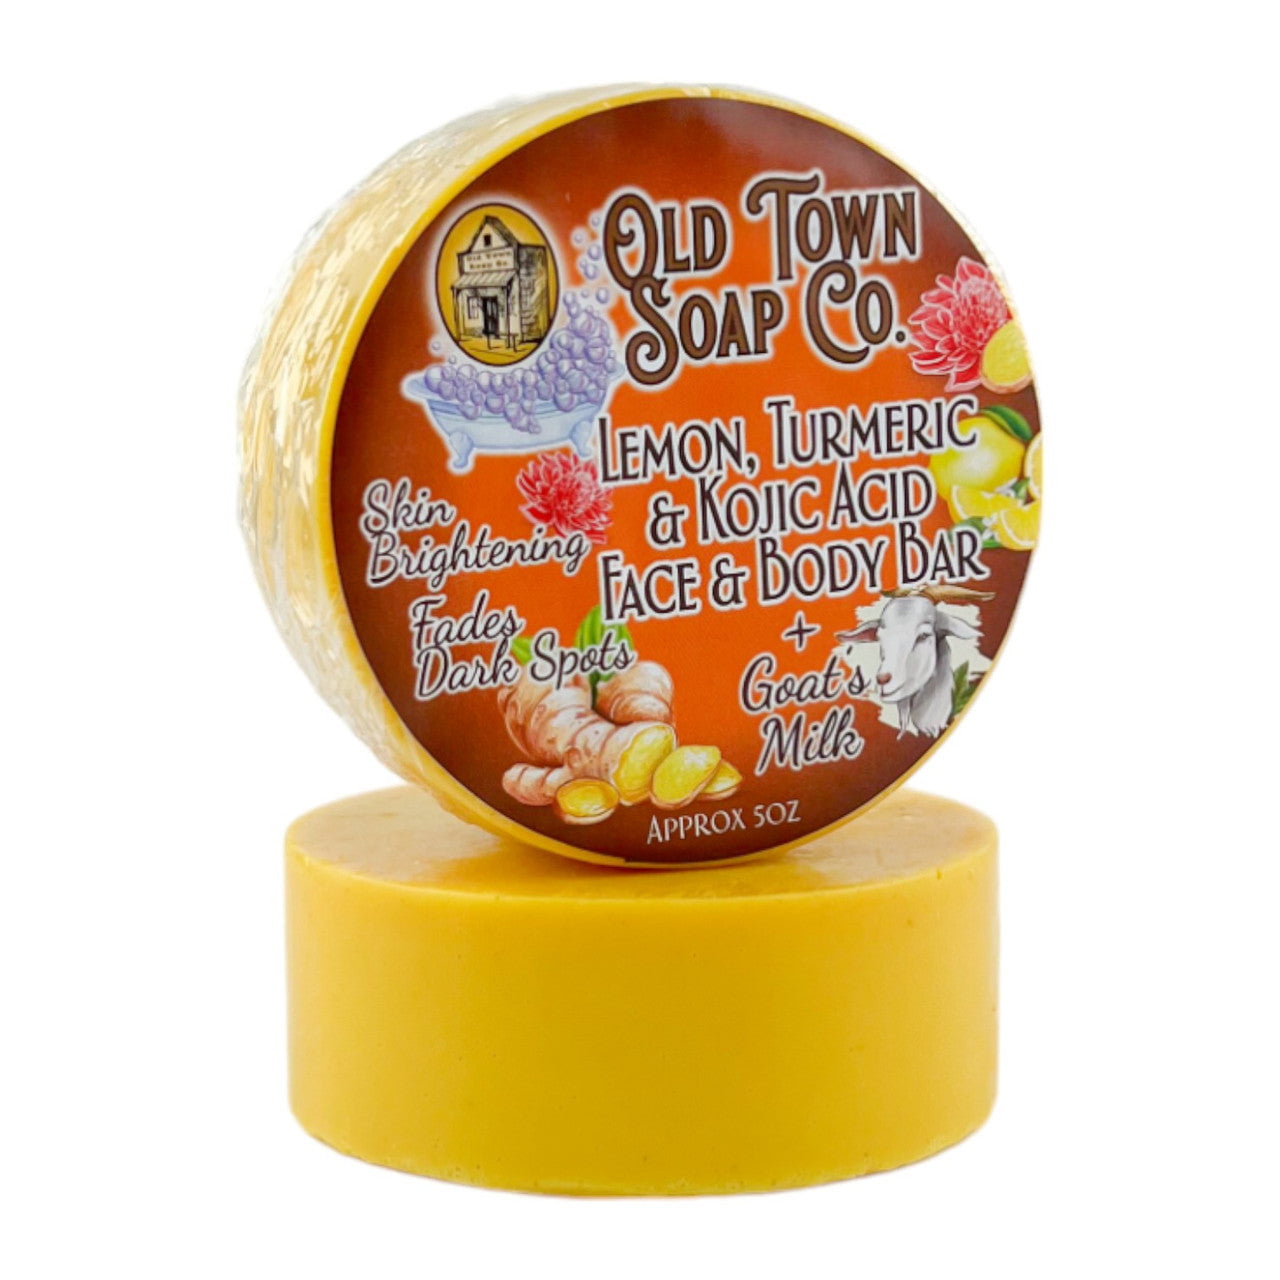 Lemon, Turmeric, &amp; Kojic Acid Face &amp; Body Bar - Old Town Soap Co.